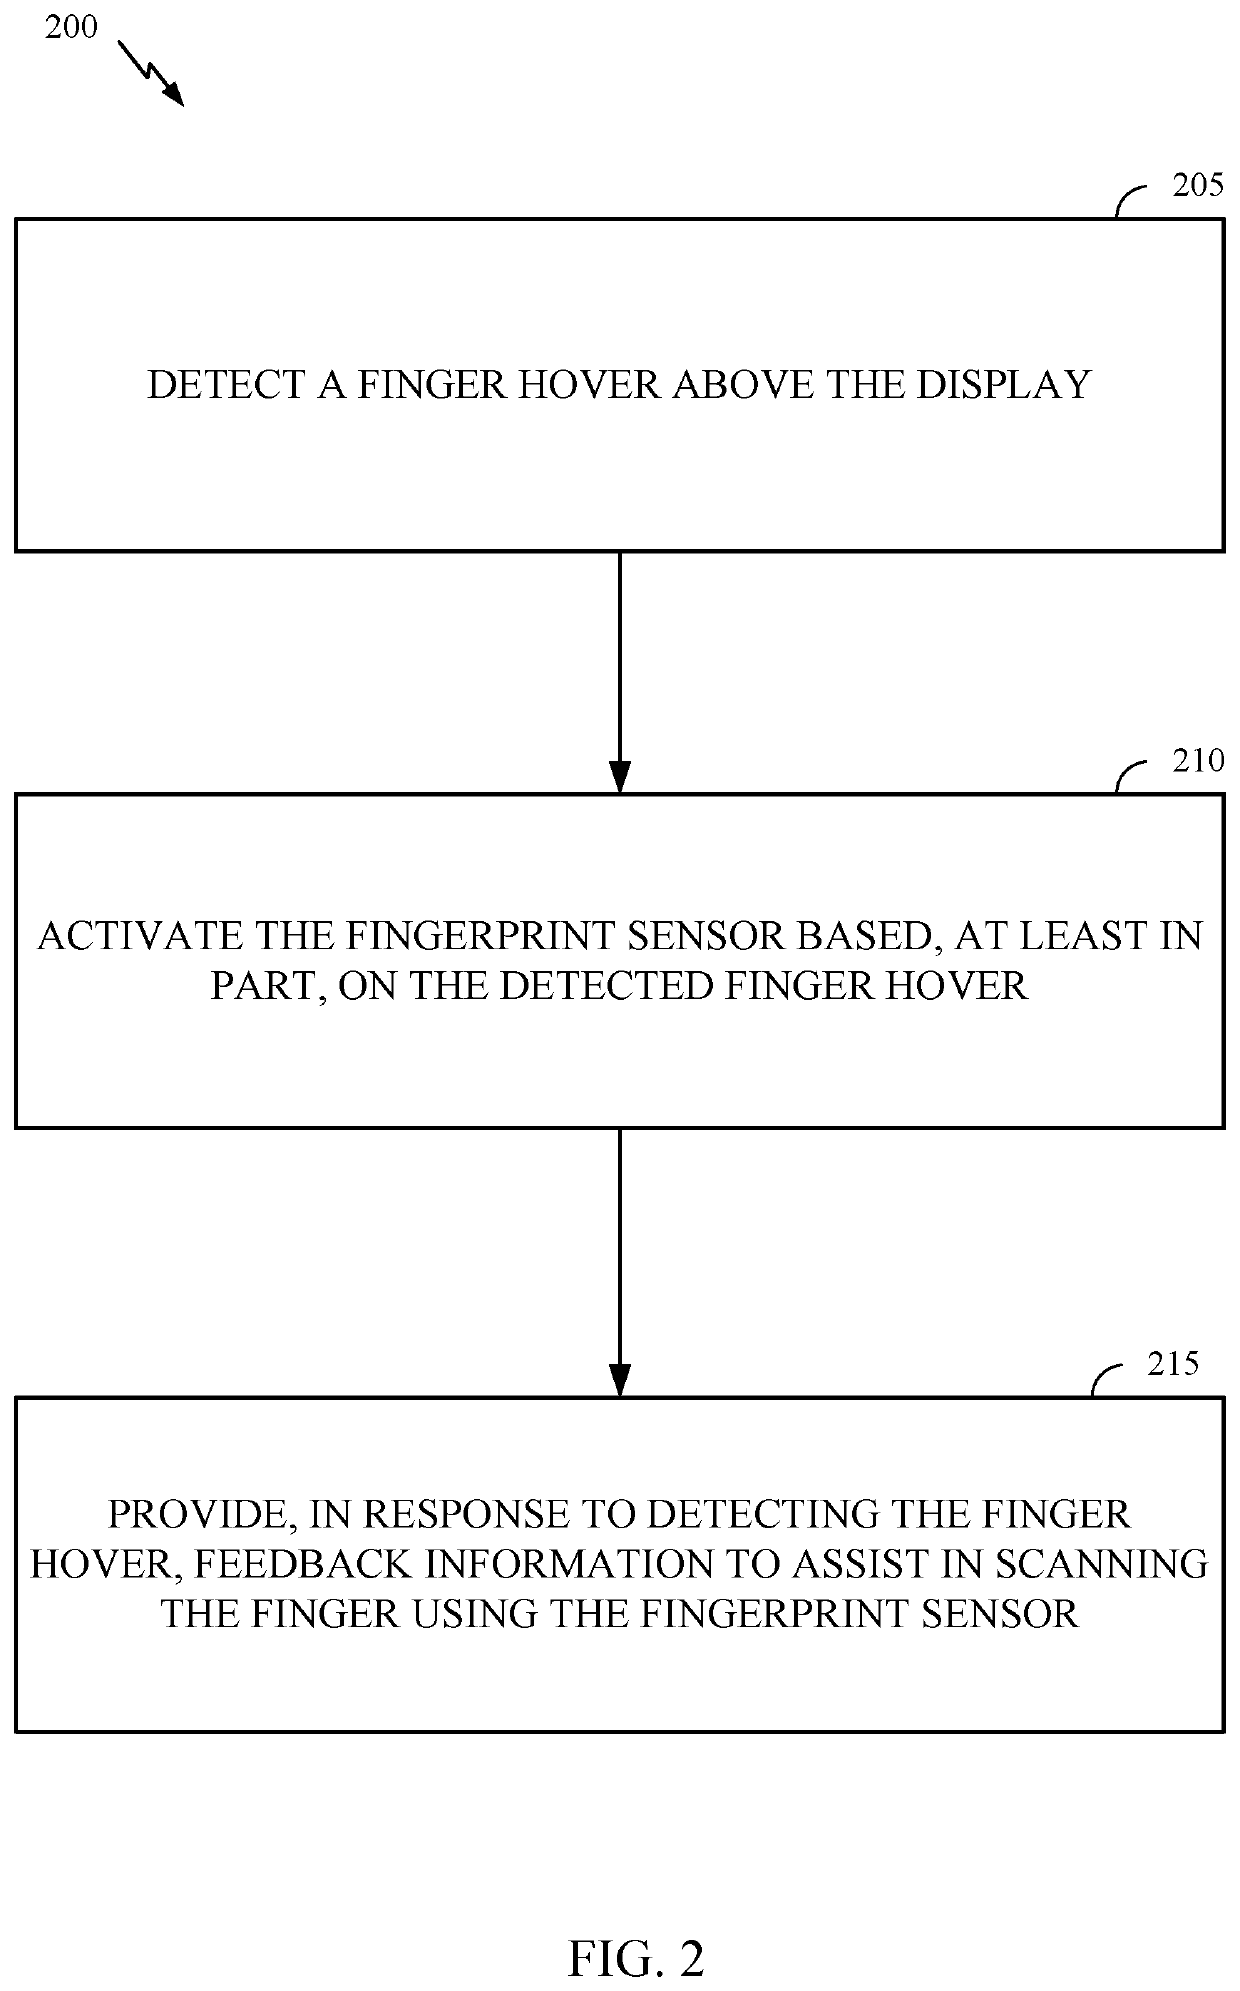 Selective fingerprint sensor activation